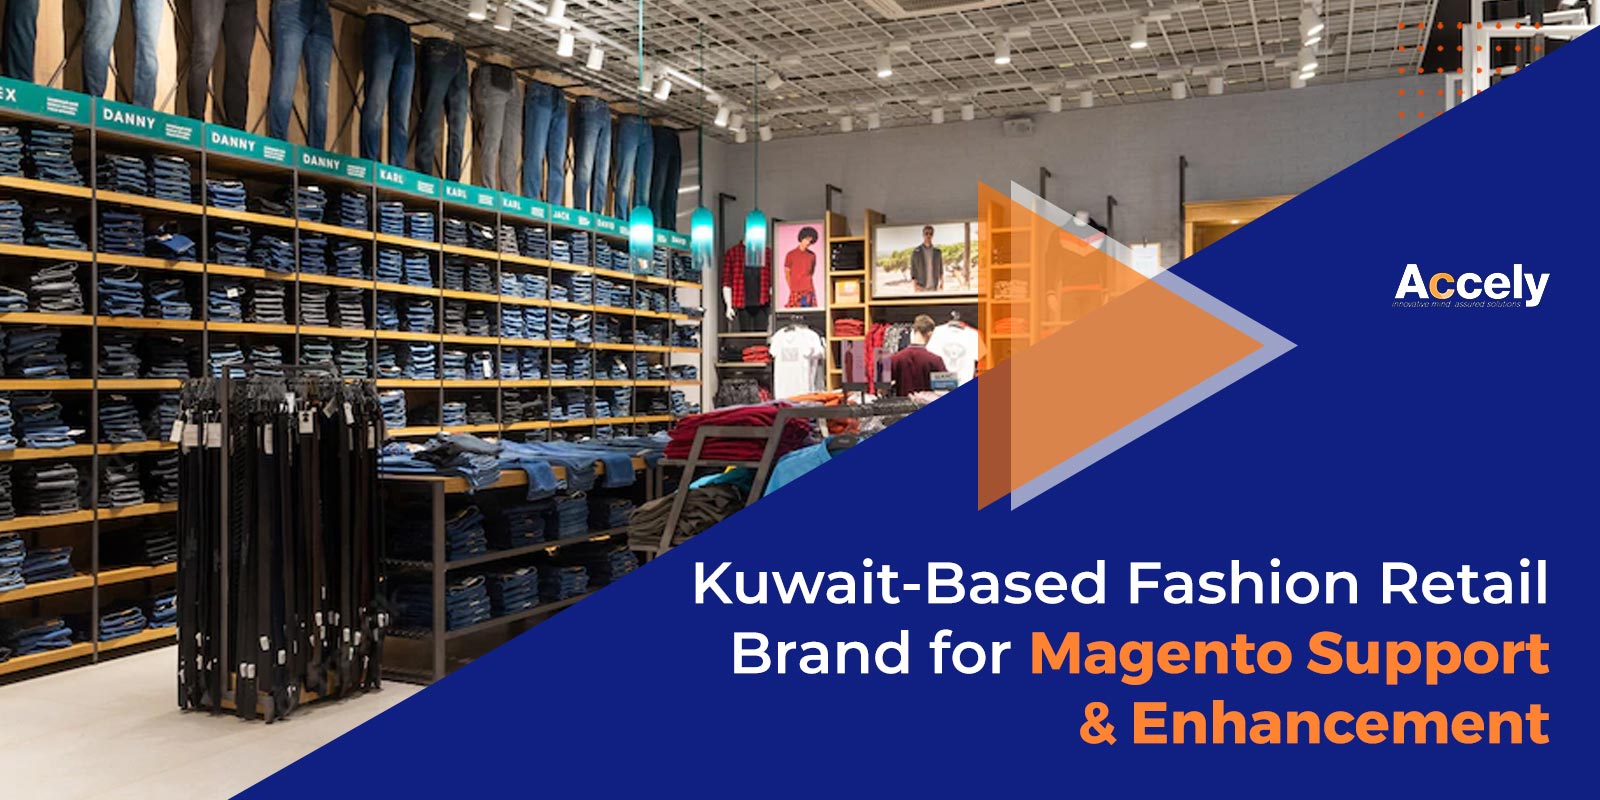 Kuwait-Based Fashion Retail Brand Seeks Magento Support & Enhancement